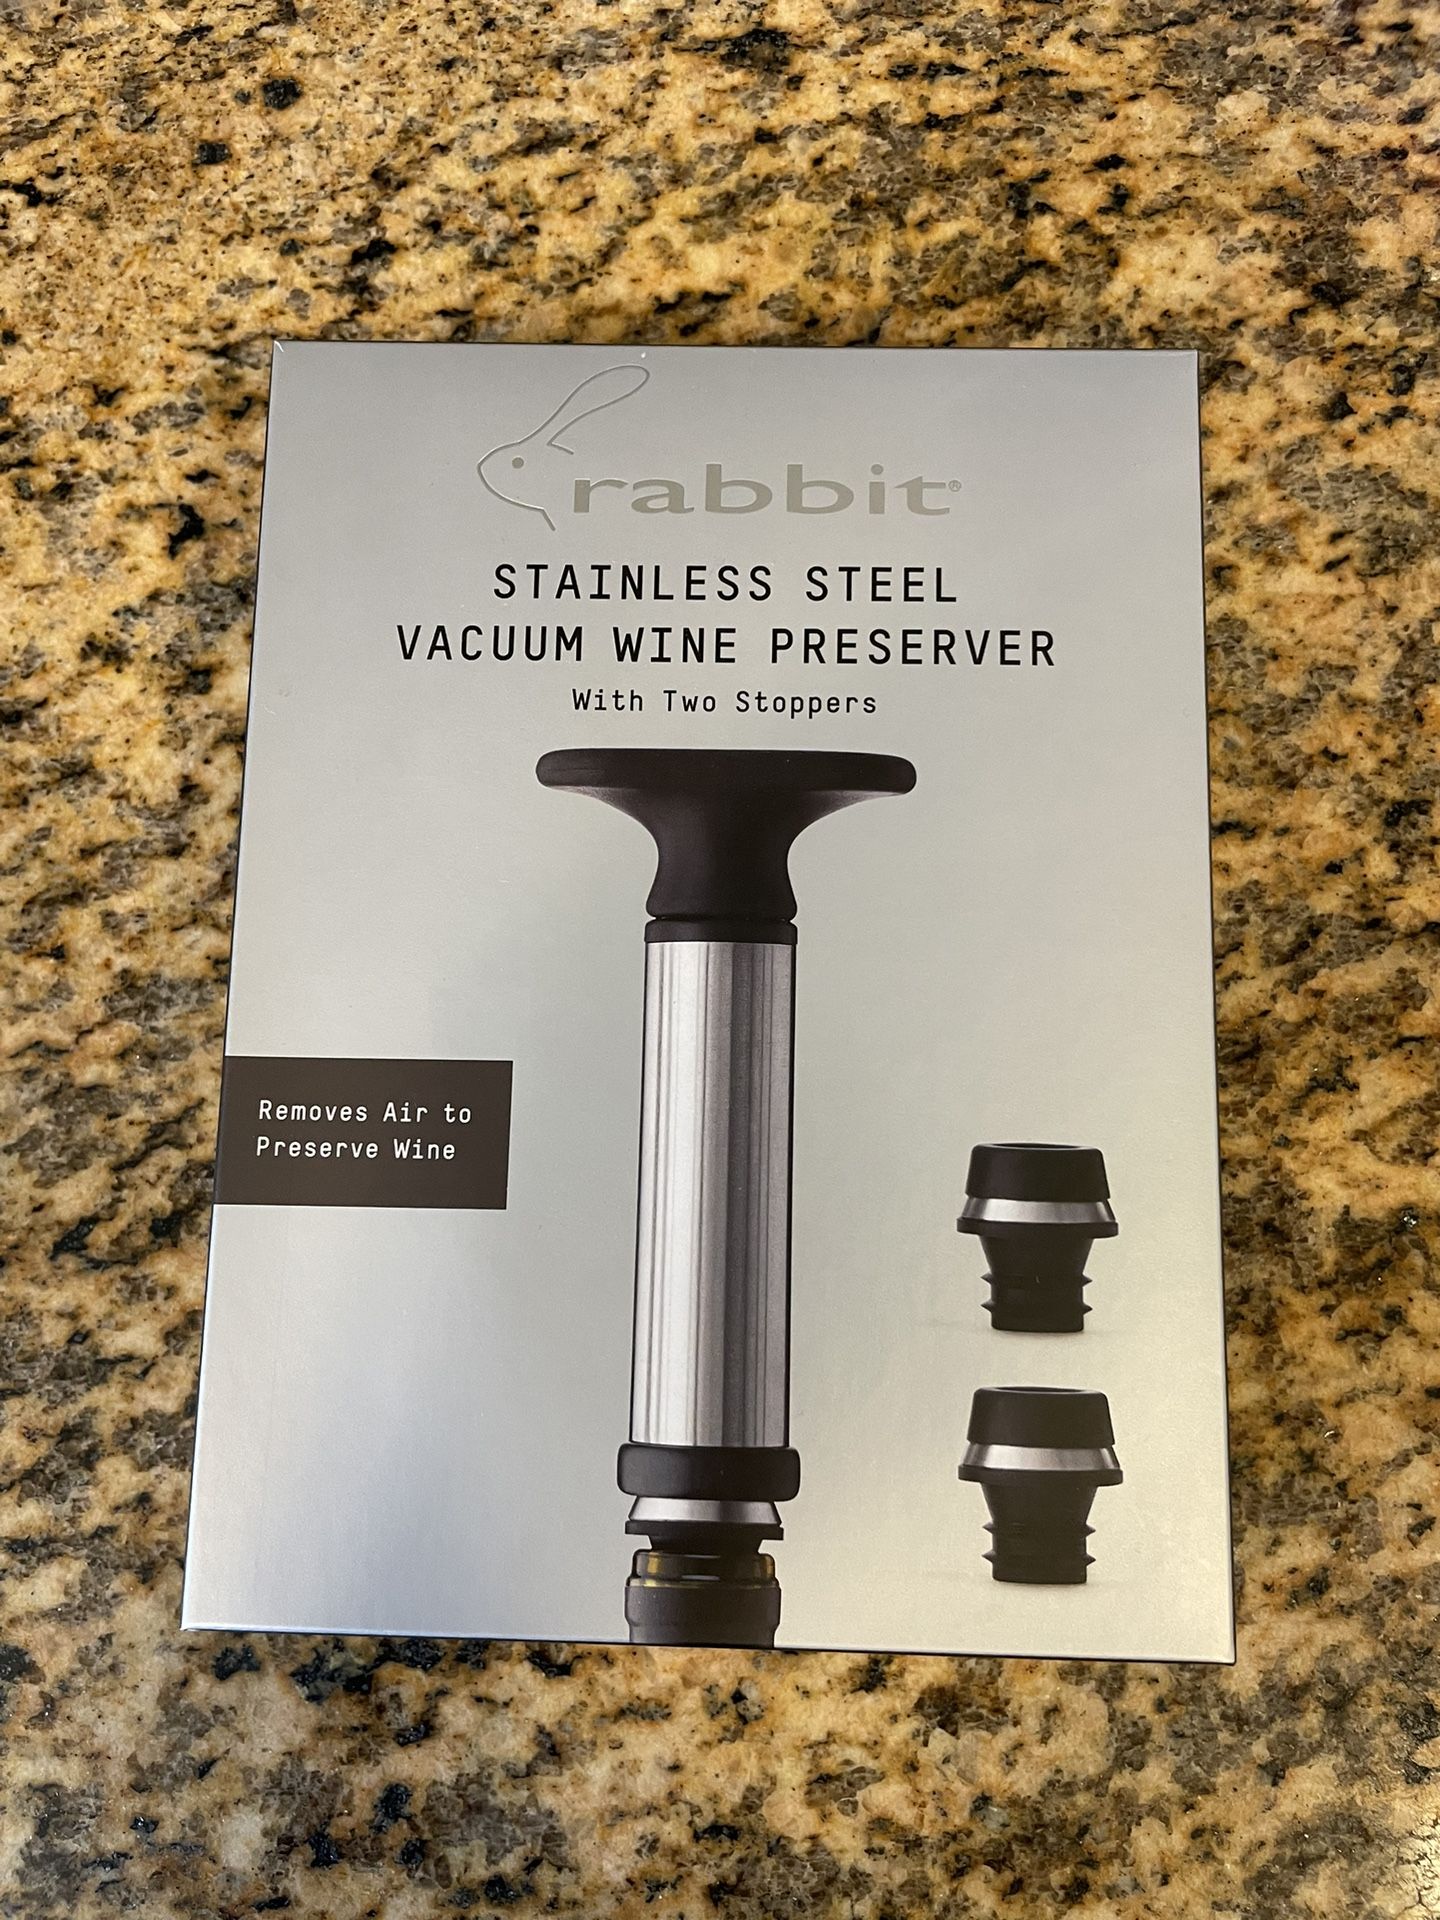 Brand New Stainless Steel Vacuum Wine Preserver